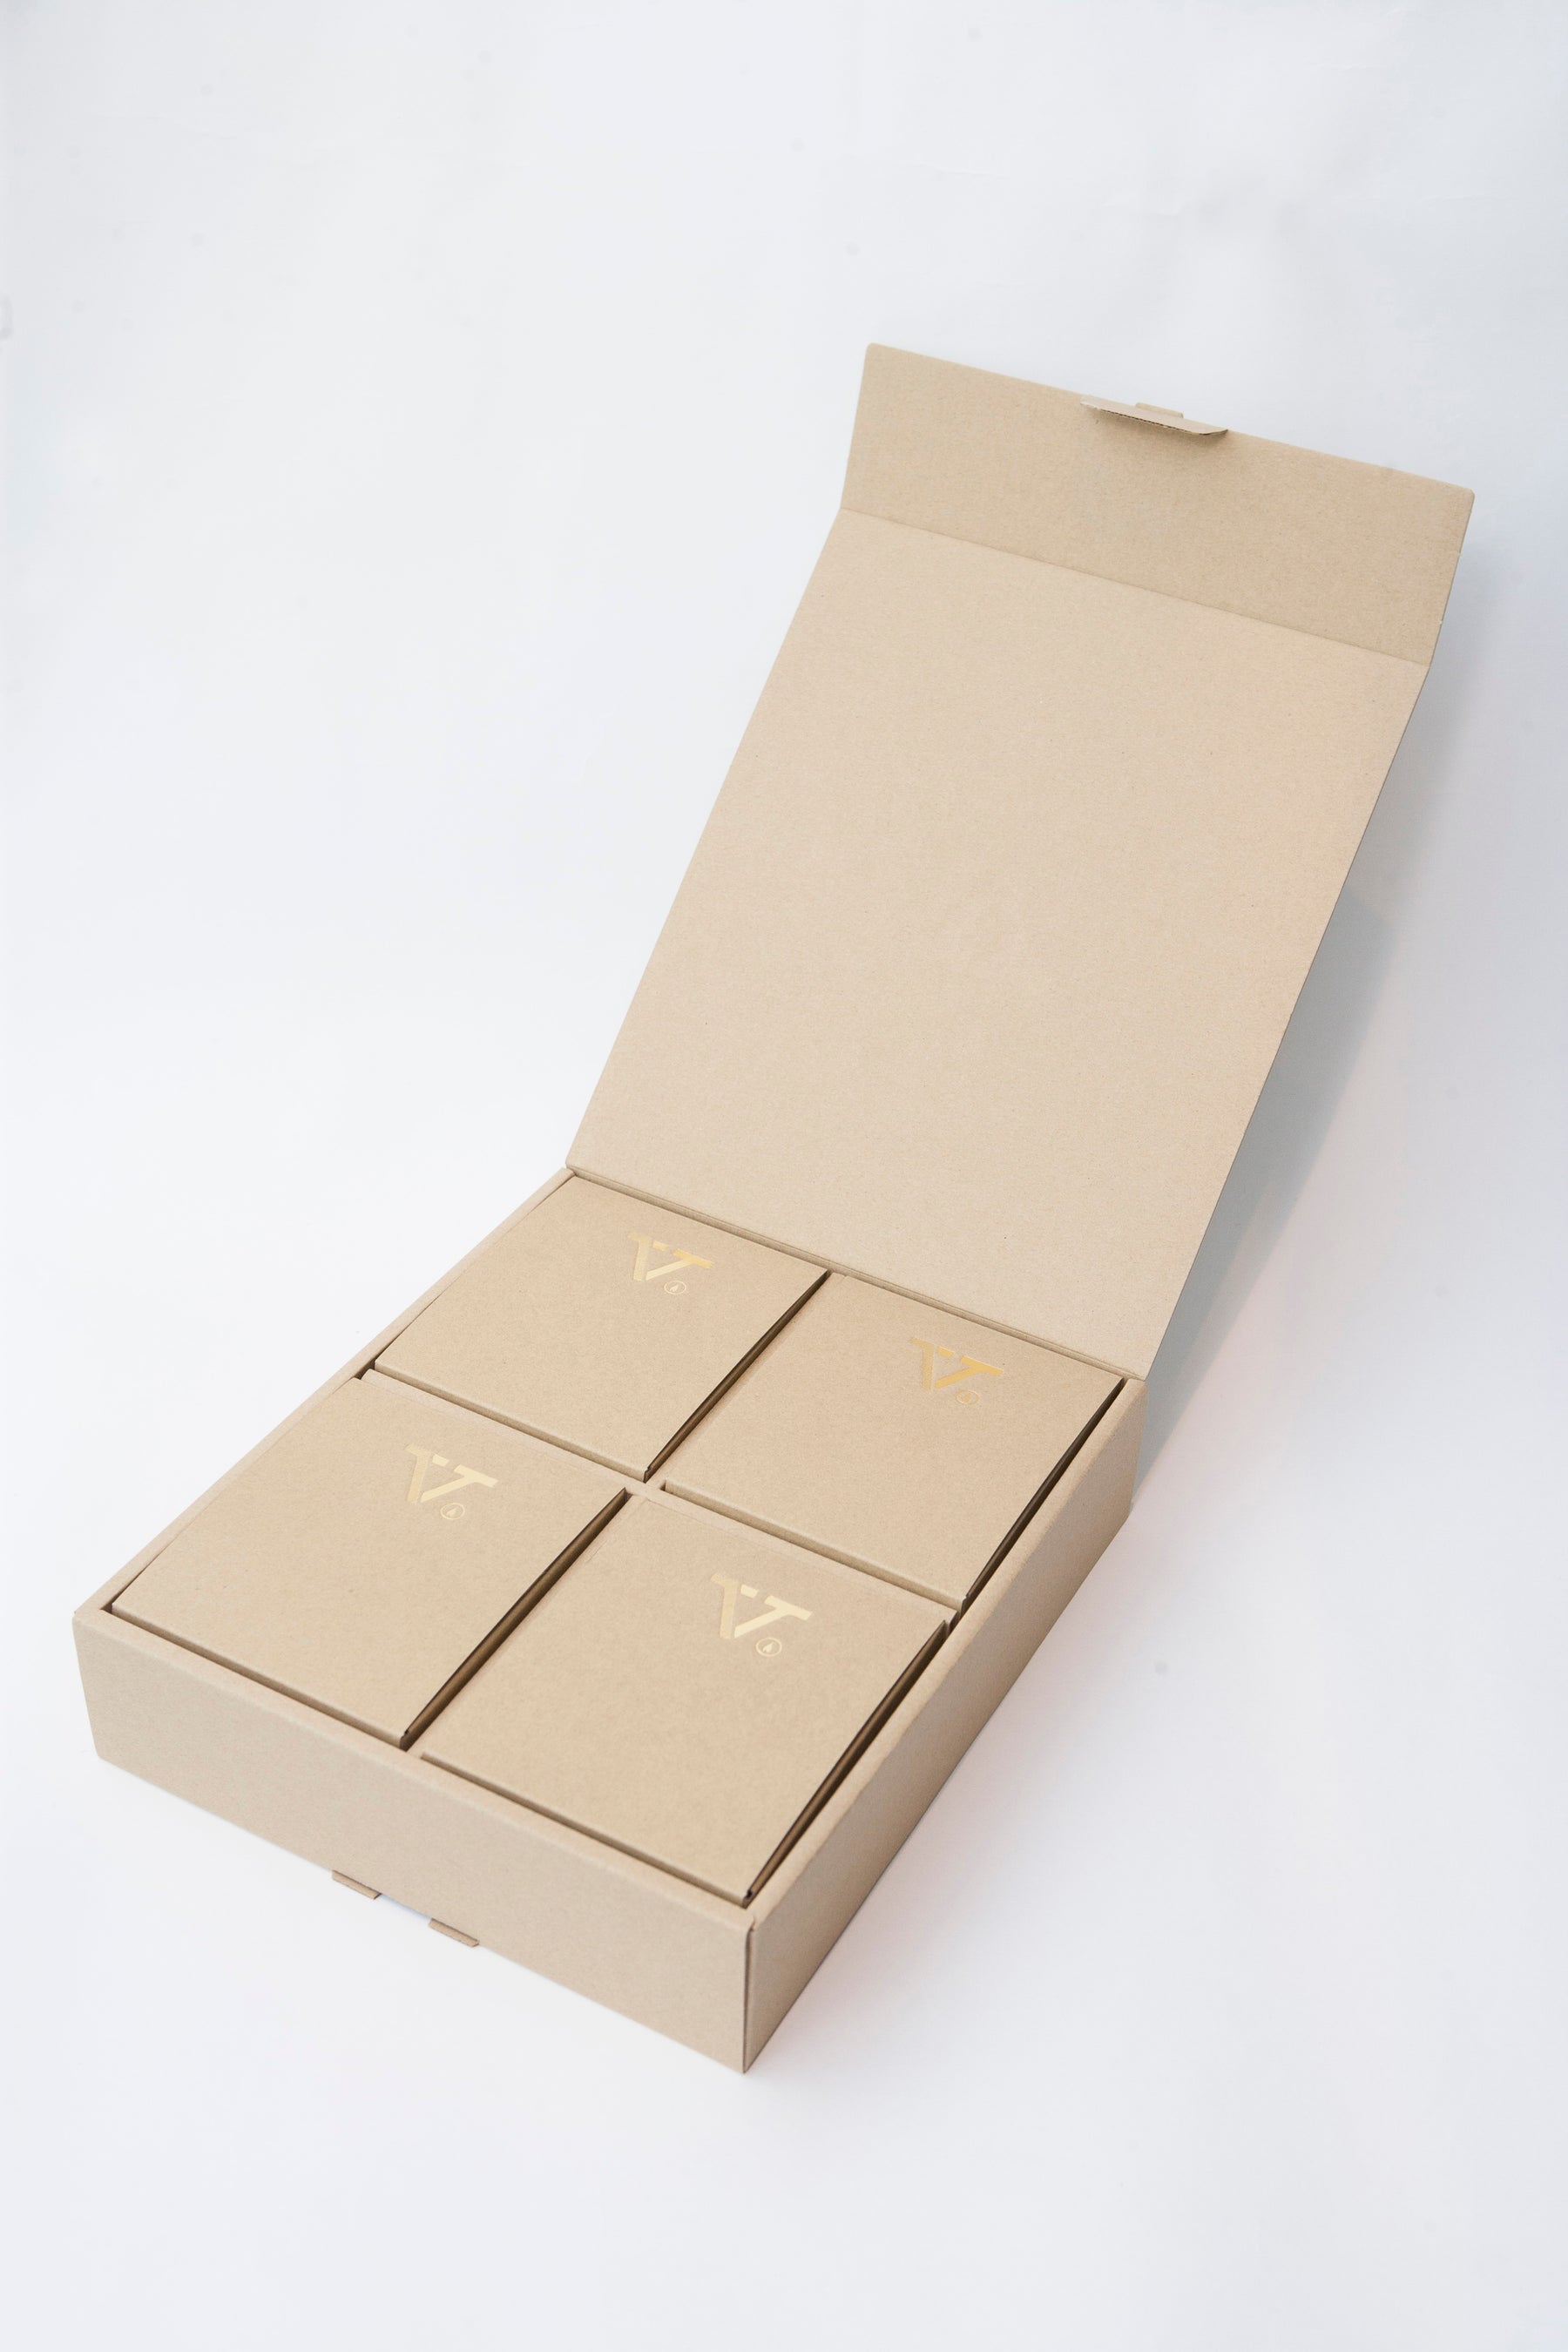 GIFT BOX - L